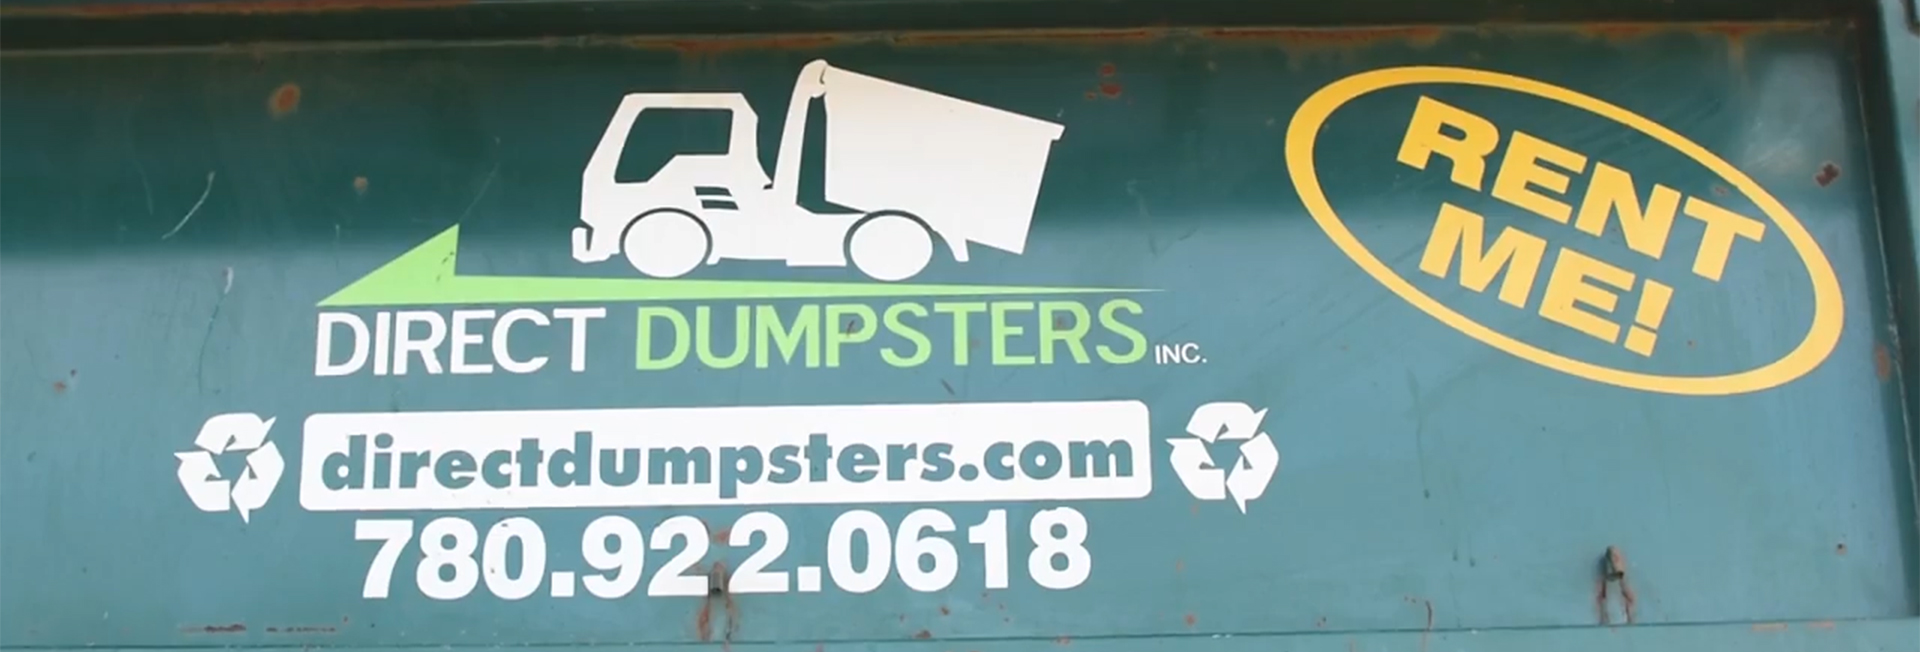 Direct Dumpsters Garbage Bin Edmonton Landfill